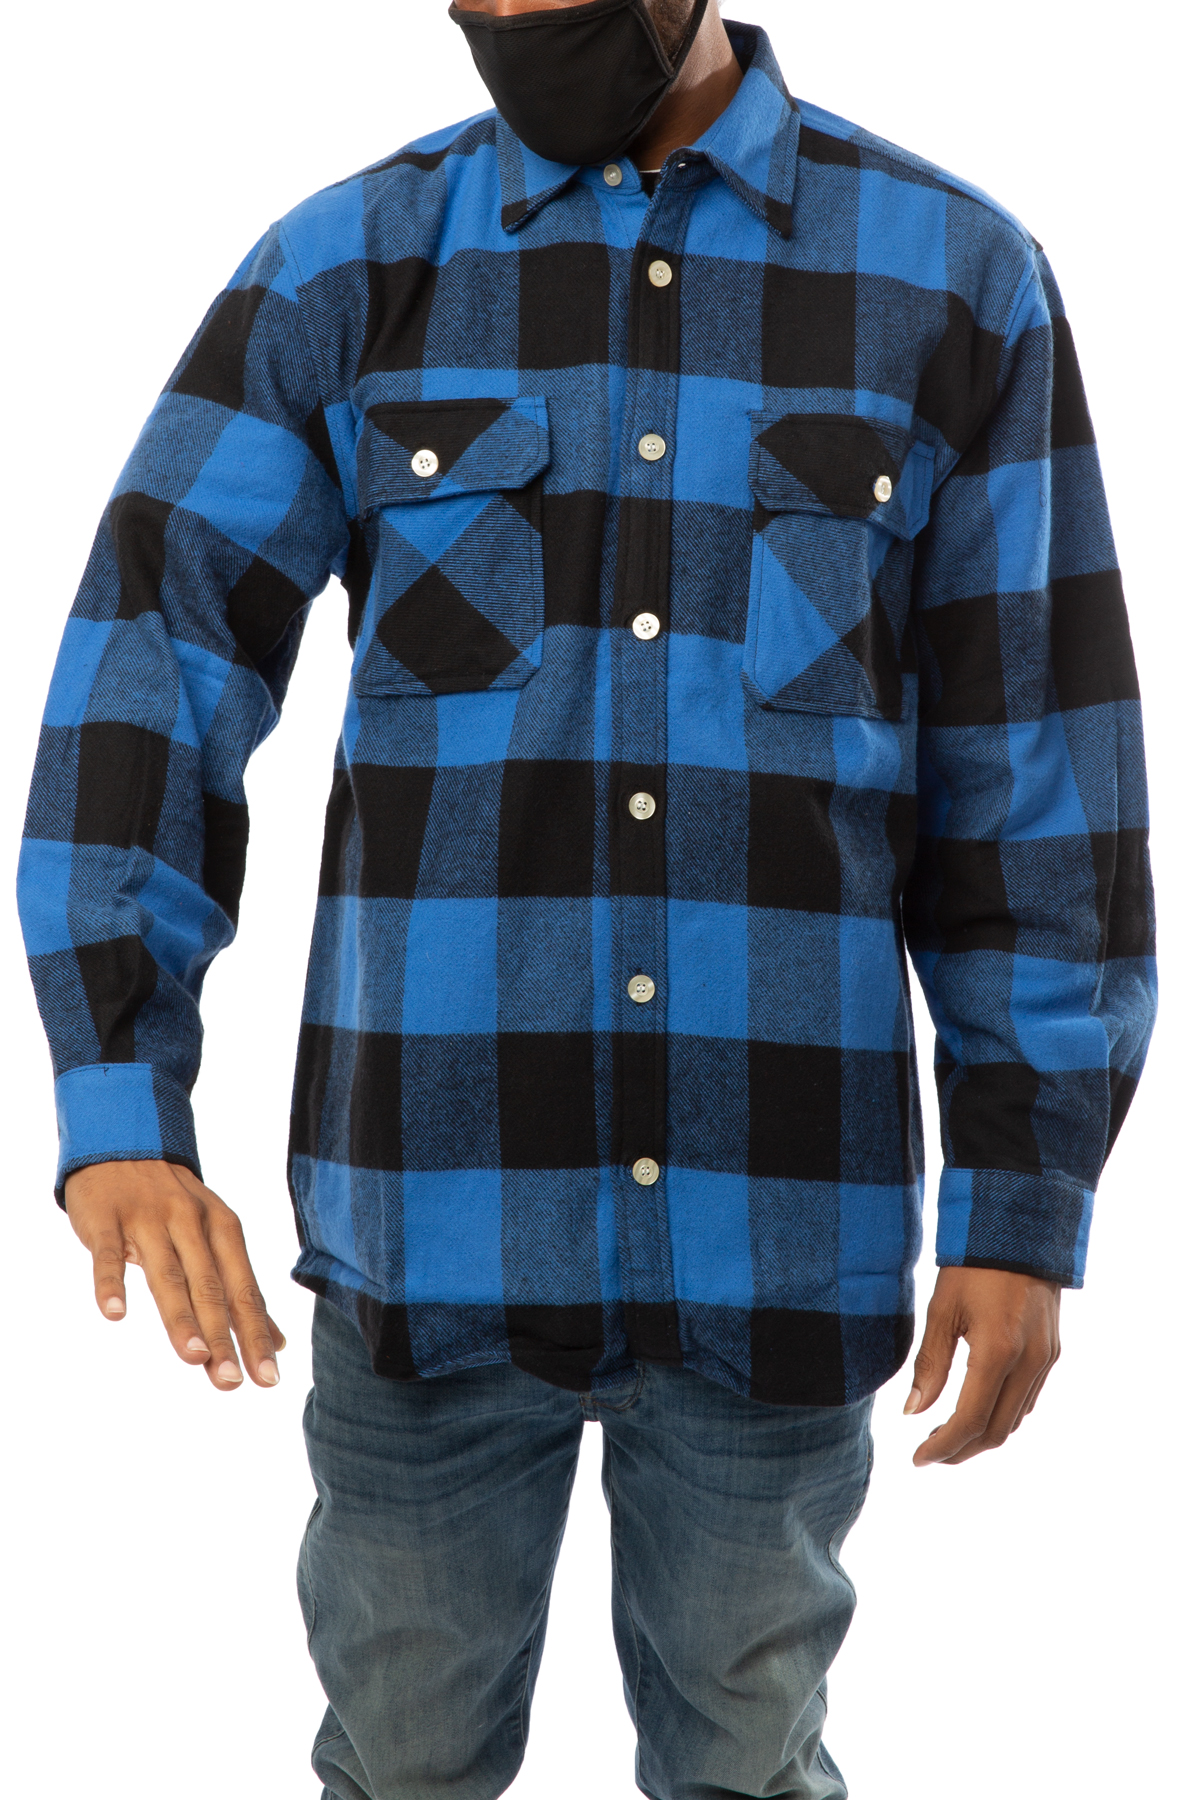 Scope Apparel, L.P. Plaid Flannel Shirt for Men in Blue at Glik's , S